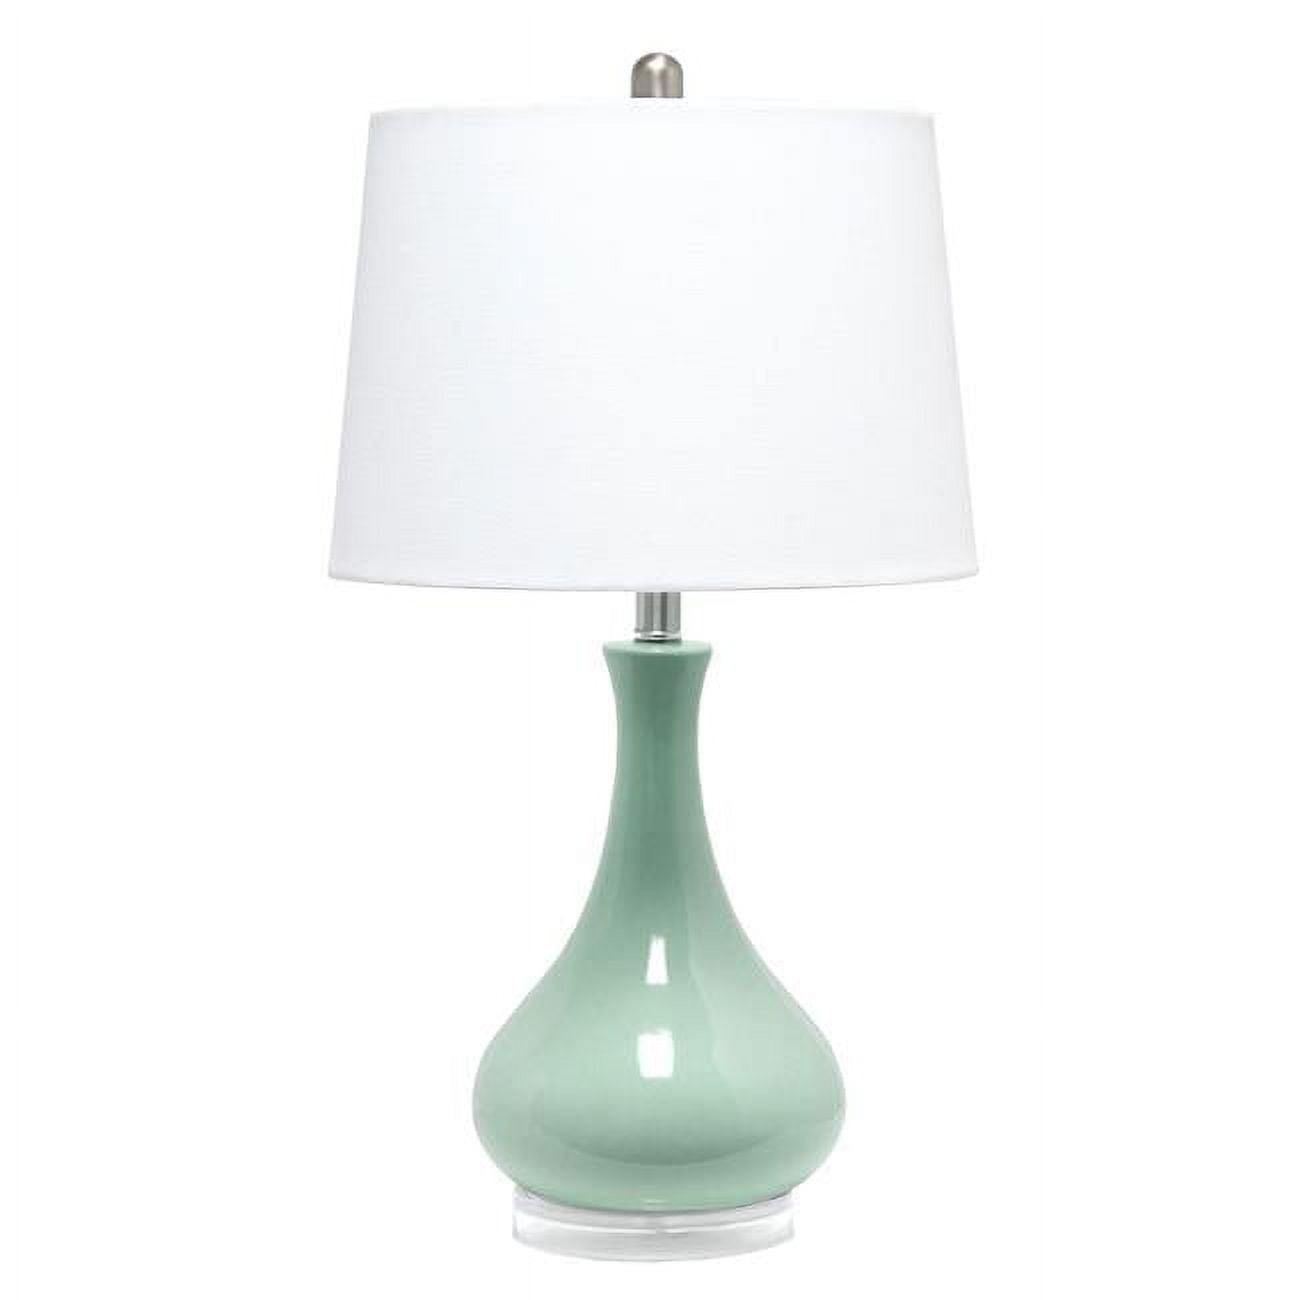 Elegant Ceramic Teardrop Table Lamp in Light Blue with Fabric Shade